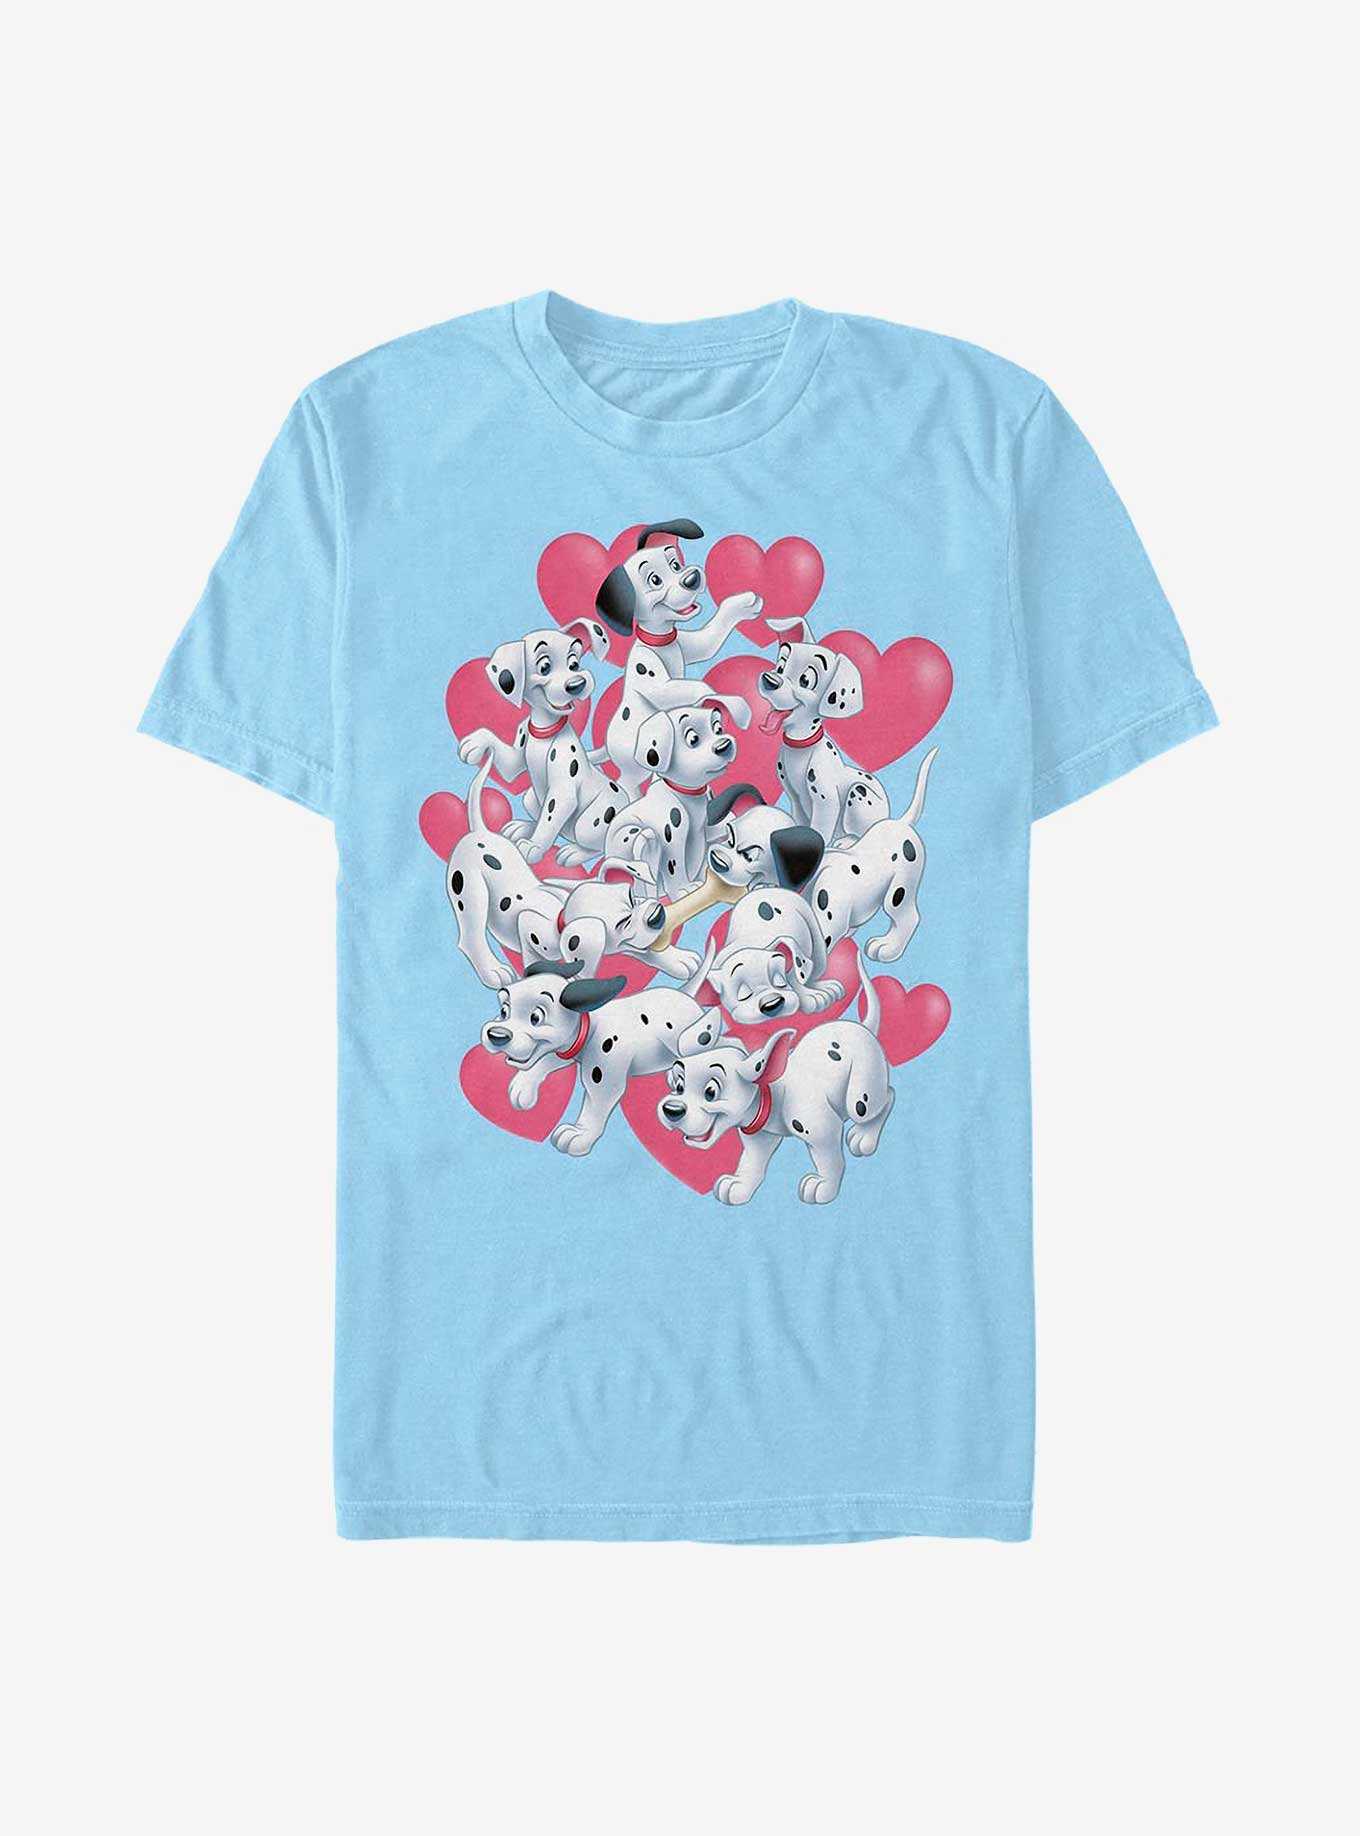 101 Dalmatians Shirt, Disney Comfort Colors Shirt, Dalmatian - Inspire  Uplift